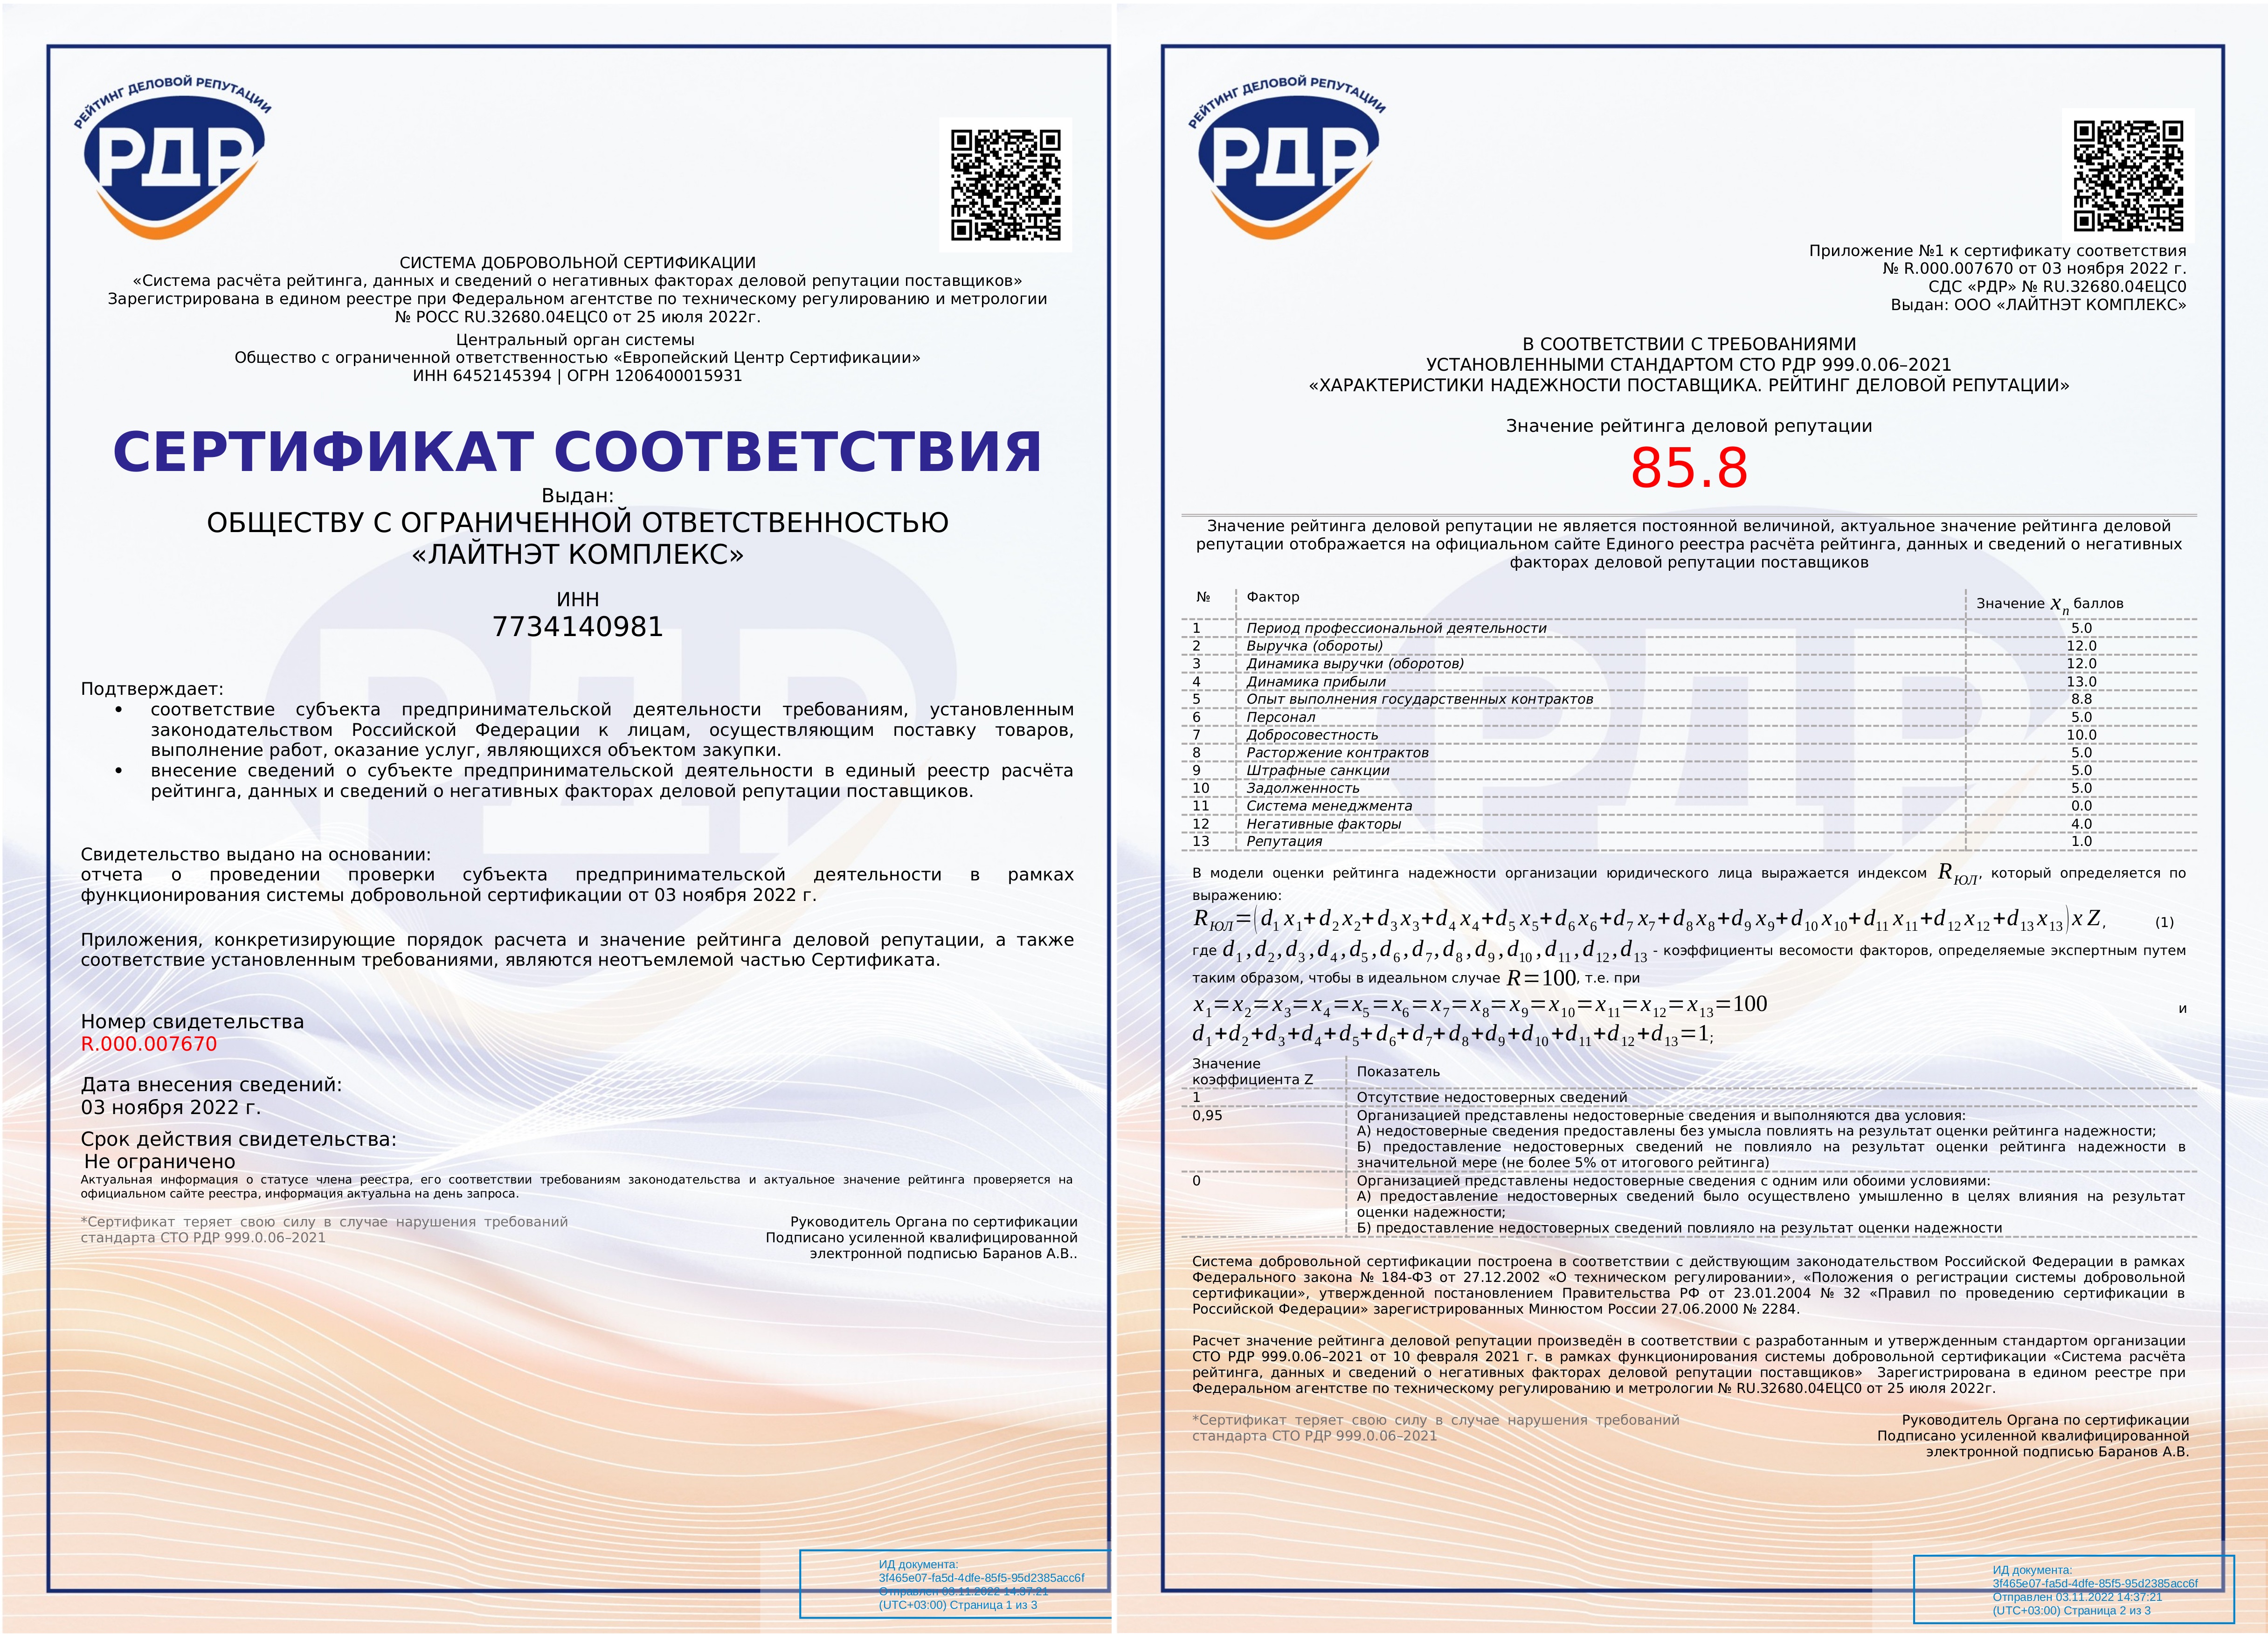 Сертификат РДР R 000 007670